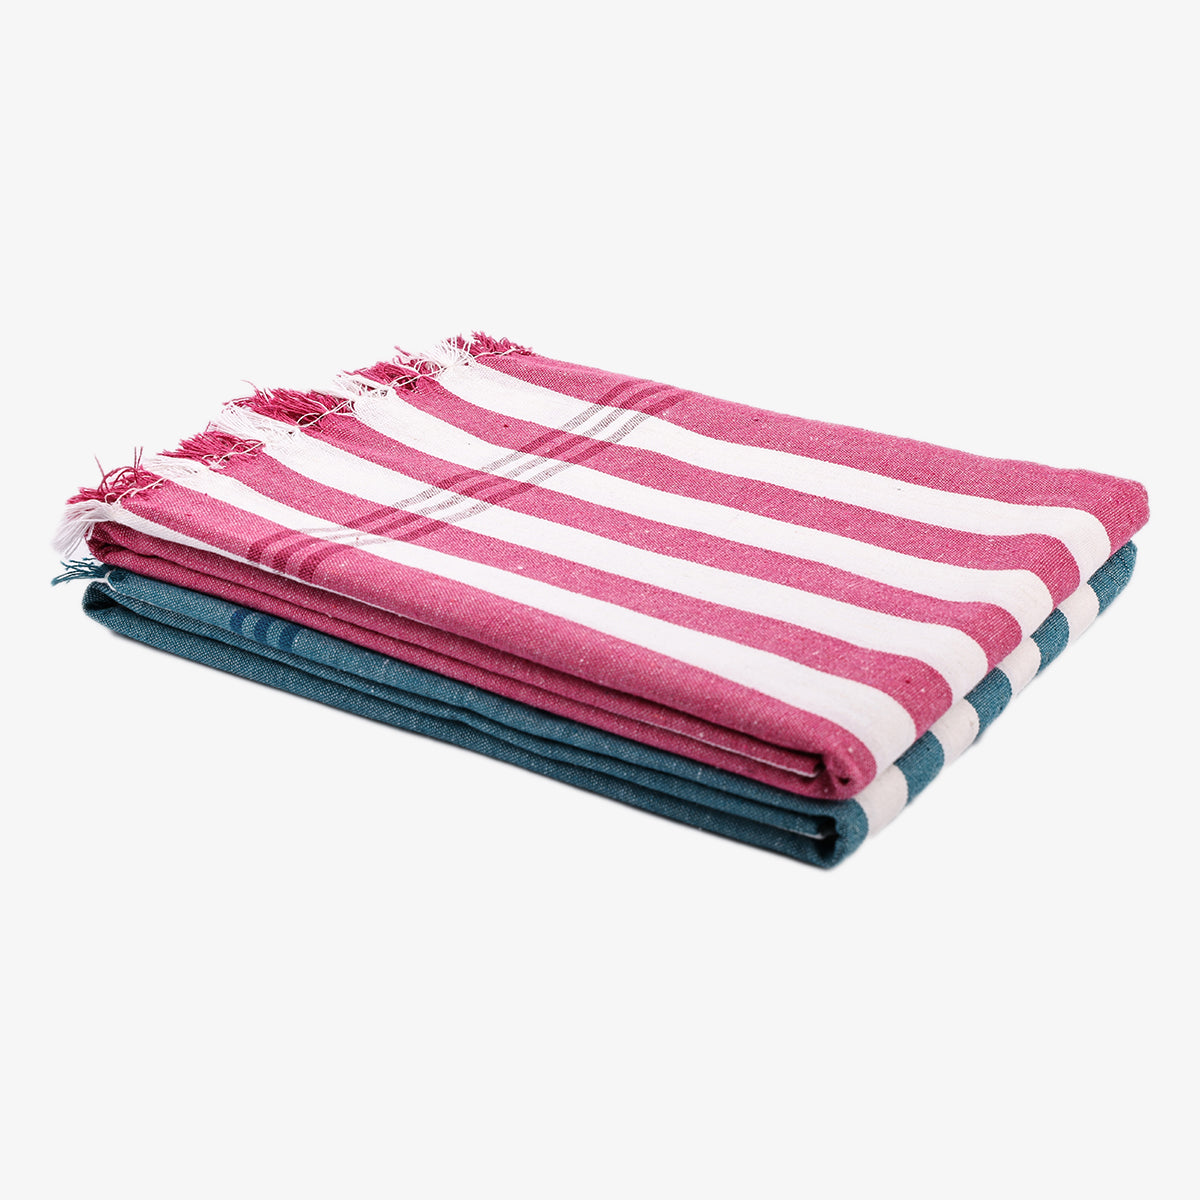 liya handloom multi color cotton bath towels/big towel combo pack of 2 (LIGHTPINK+DARKGREEN)